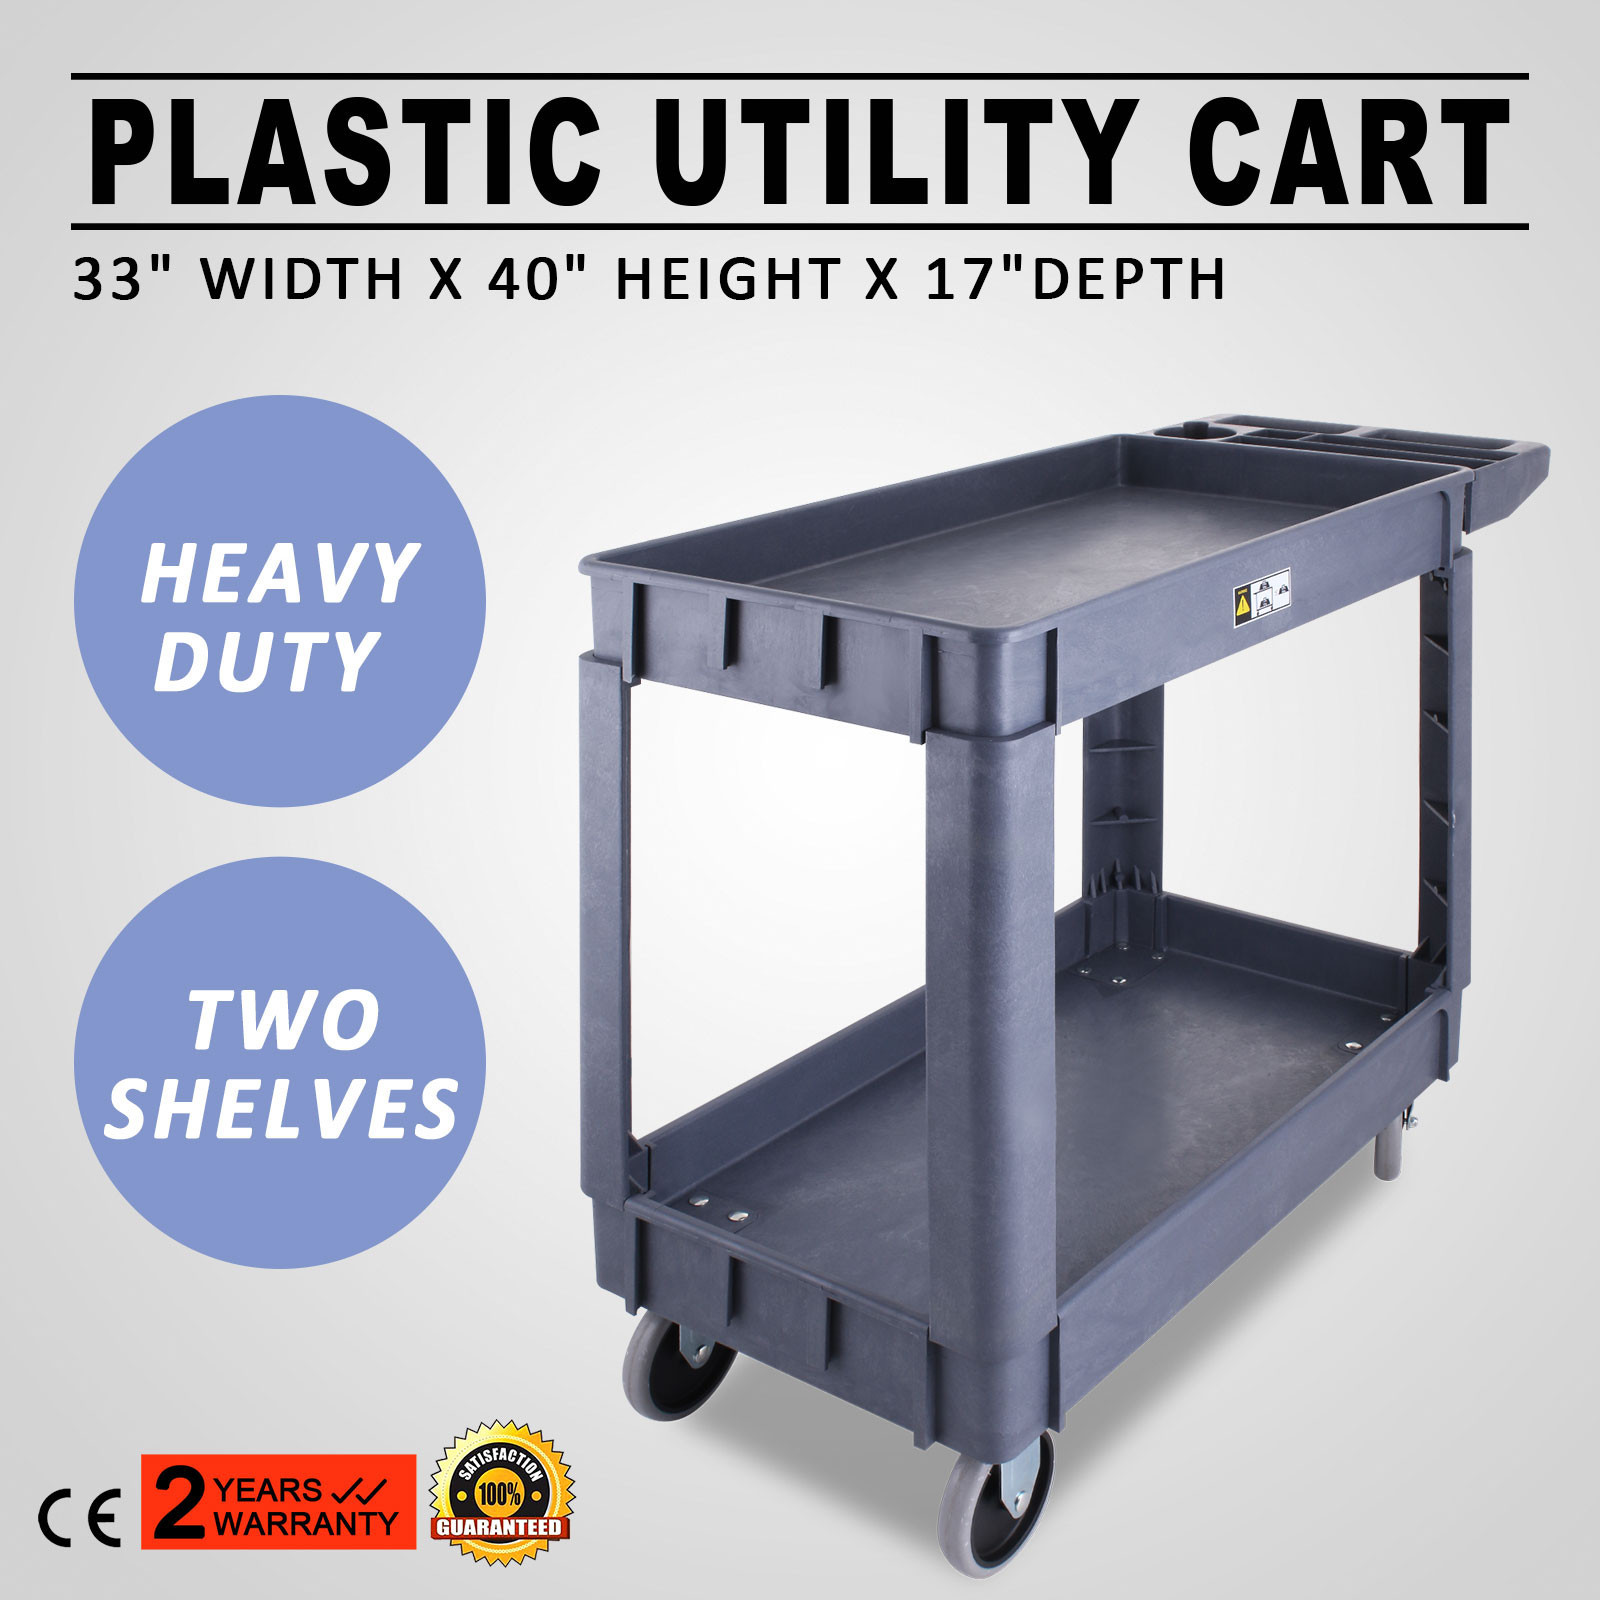 PUC174033-2 Heavy-Duty Plastic Utility Cart 2 Shelves 33" Width от Vevor Many GEOs